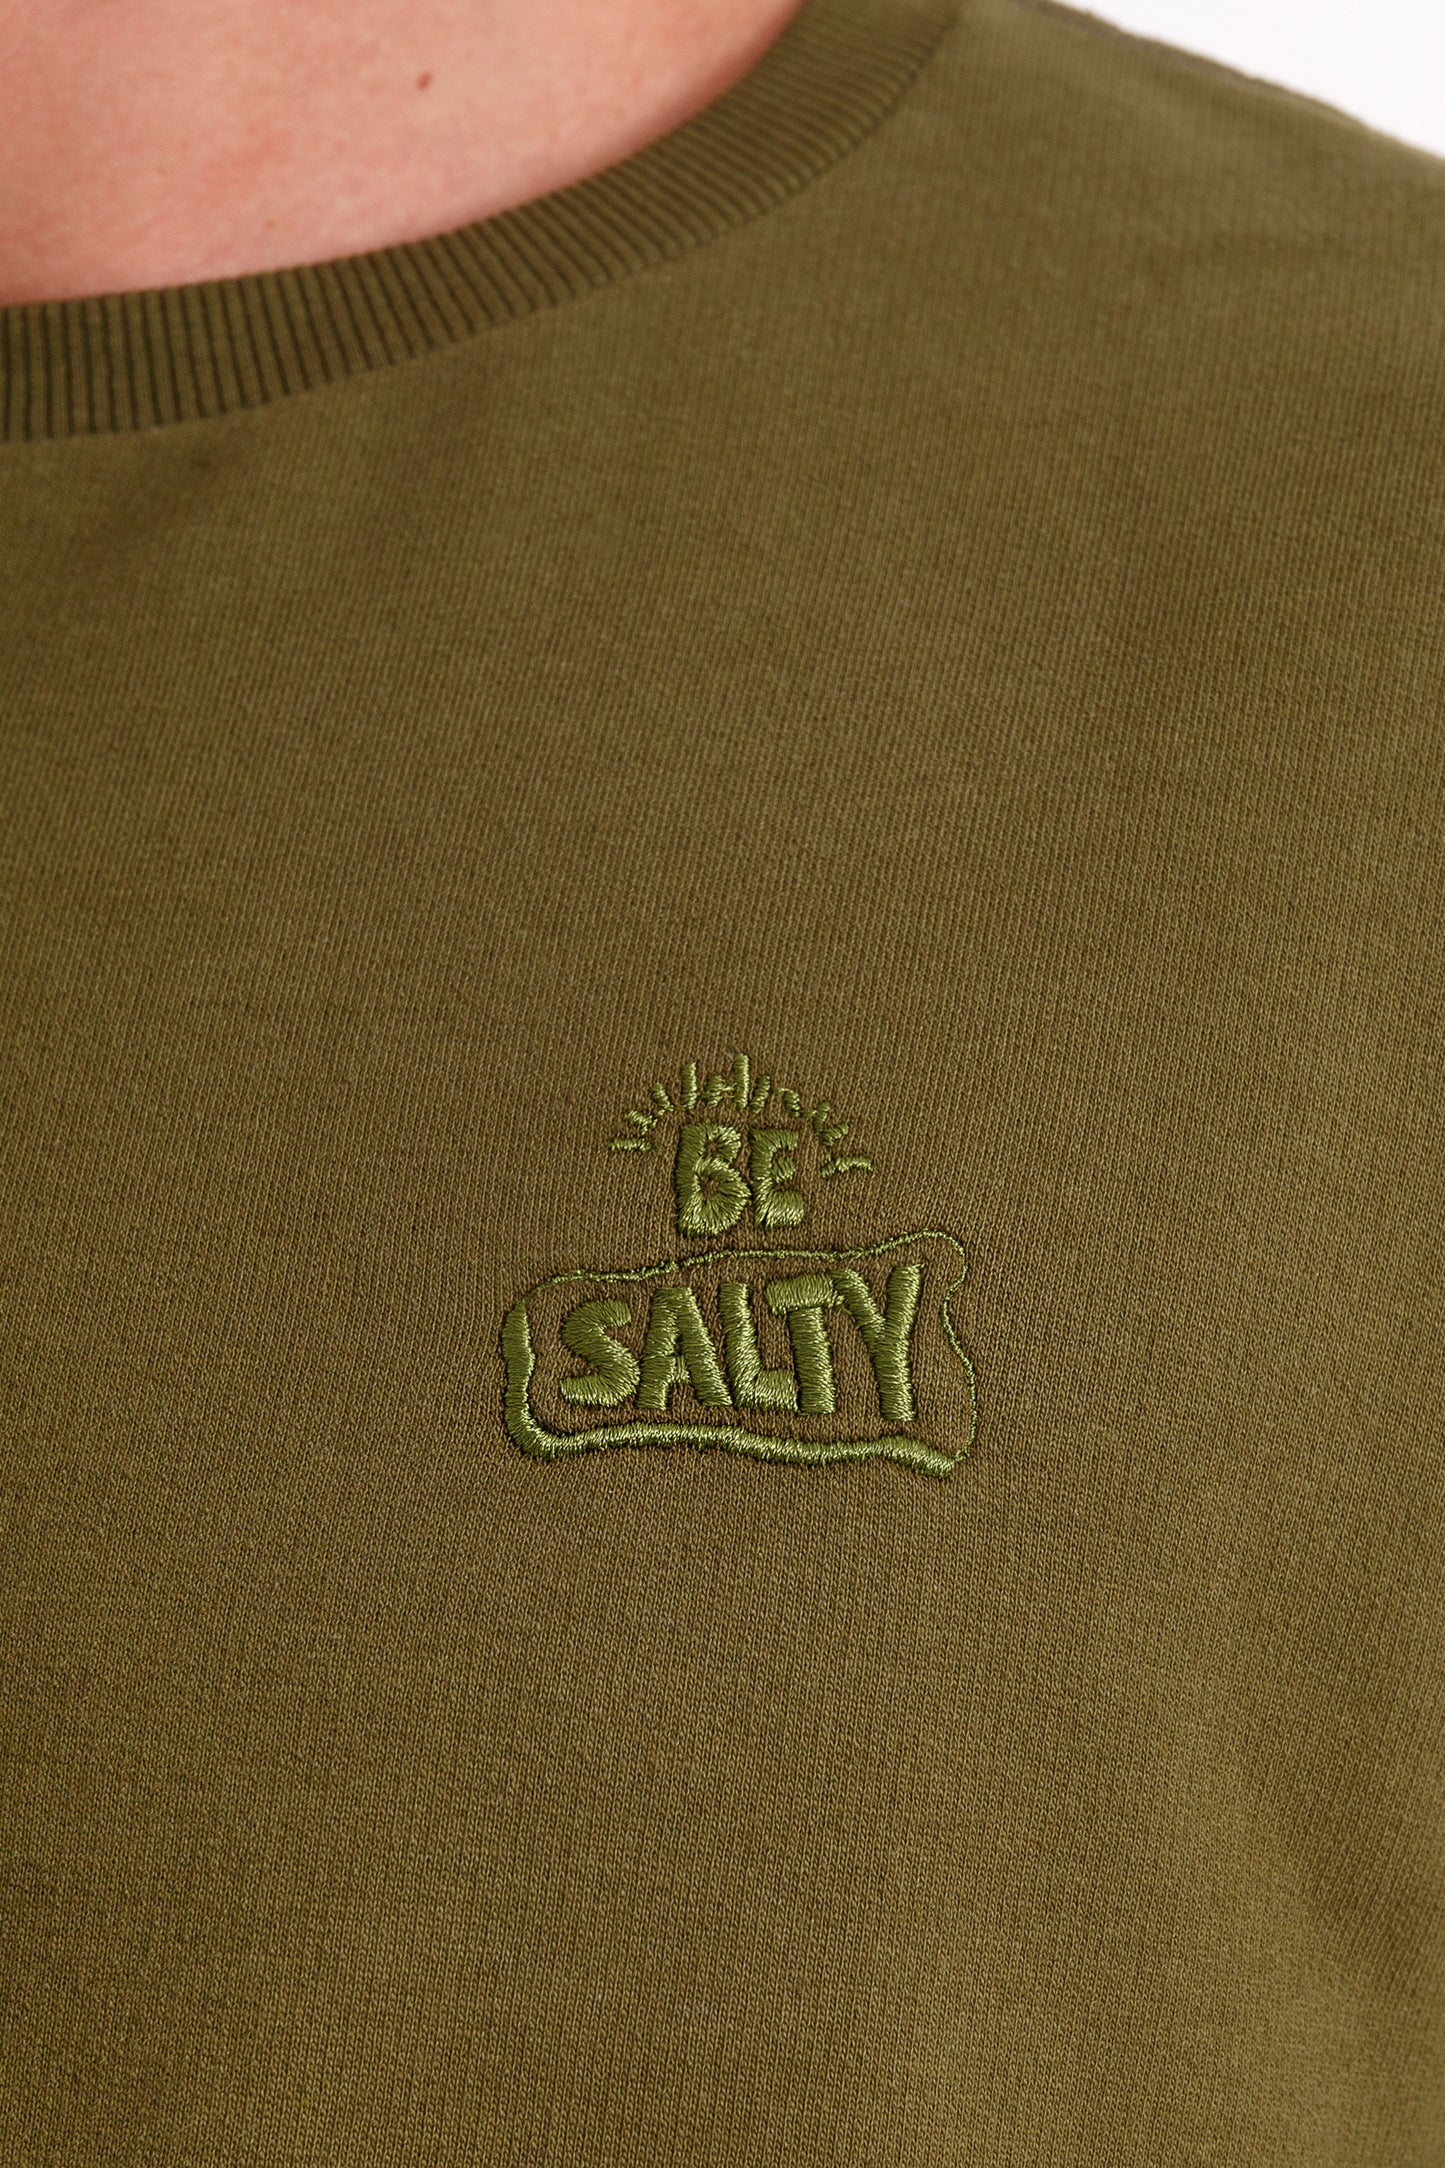 Unisex - Army Green Sweatshirt